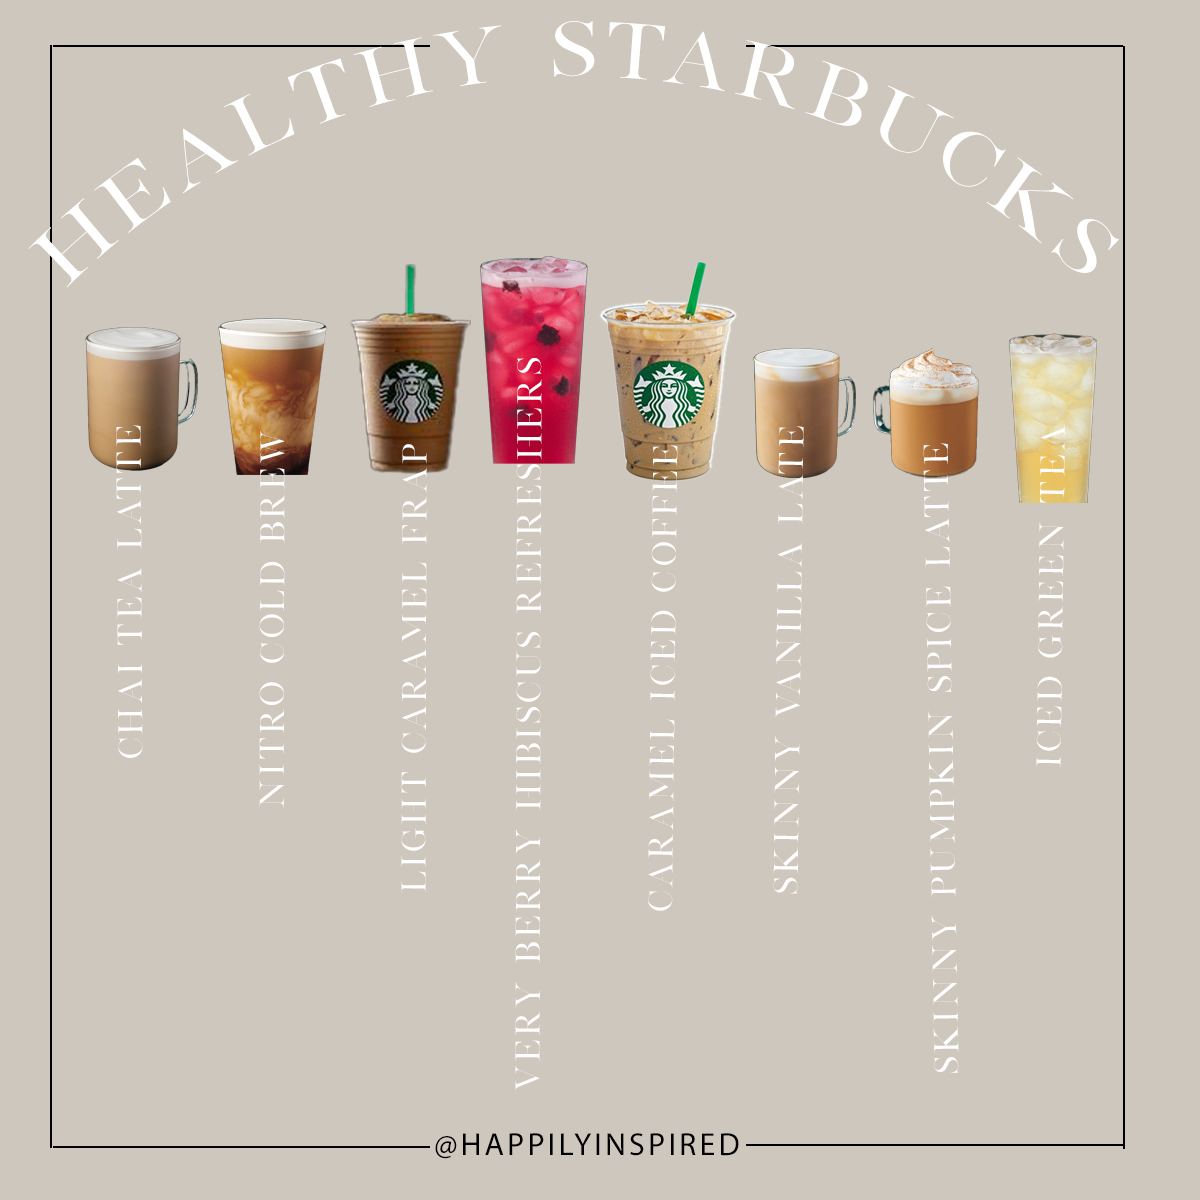 10 Healthy Starbucks Drinks That Actually Taste Good | Volume 1